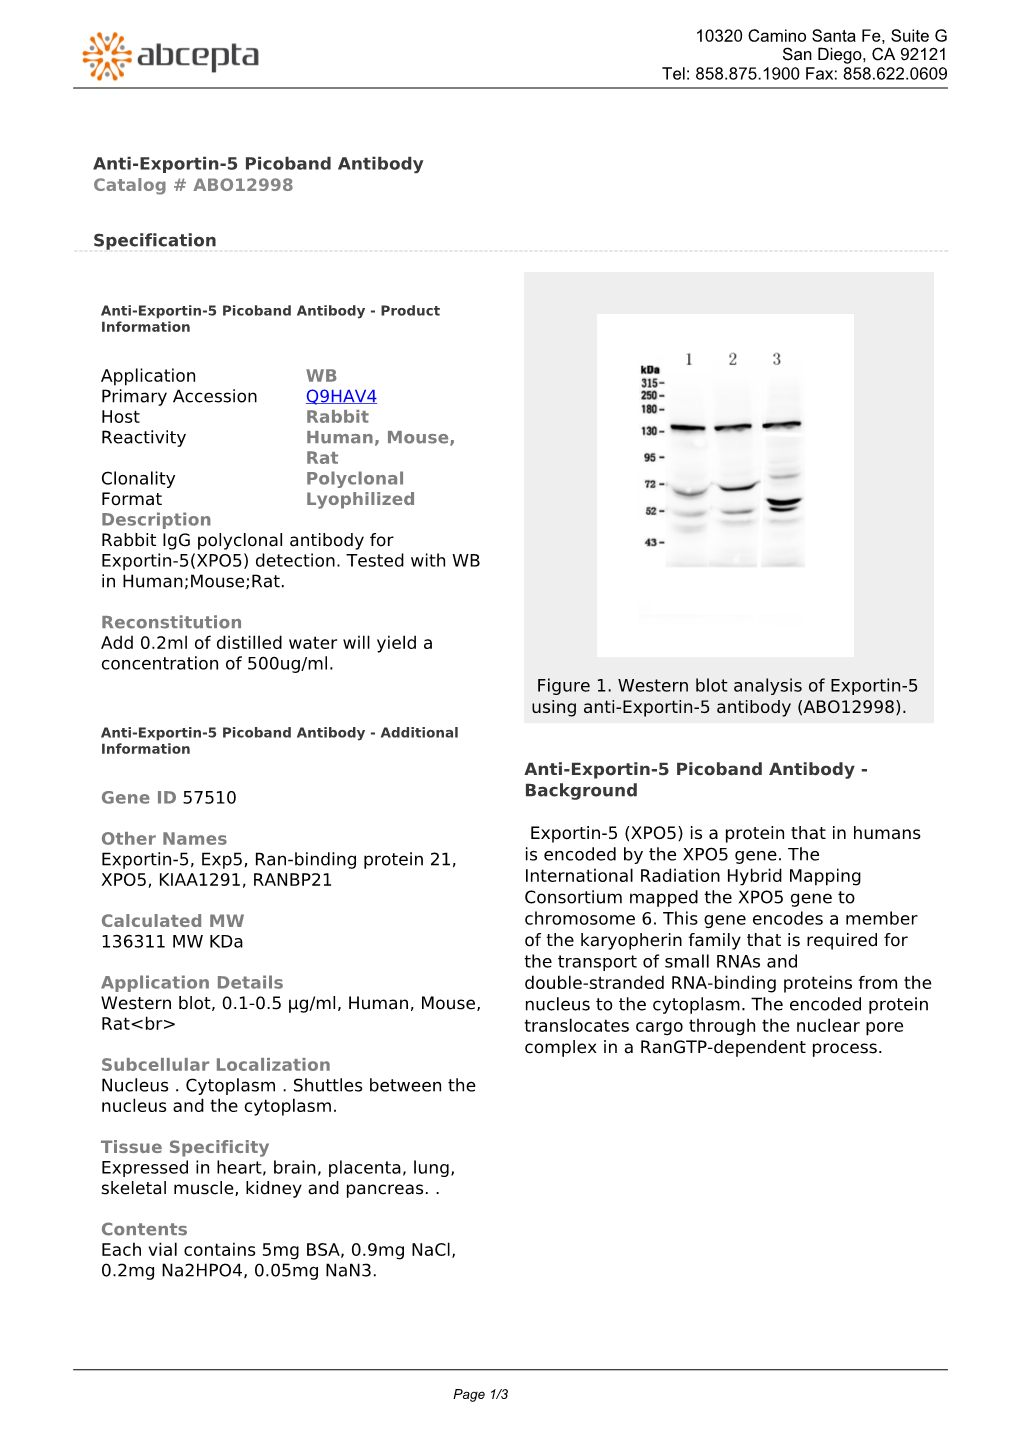 Anti-Exportin-5 Picoband Antibody Catalog # ABO12998